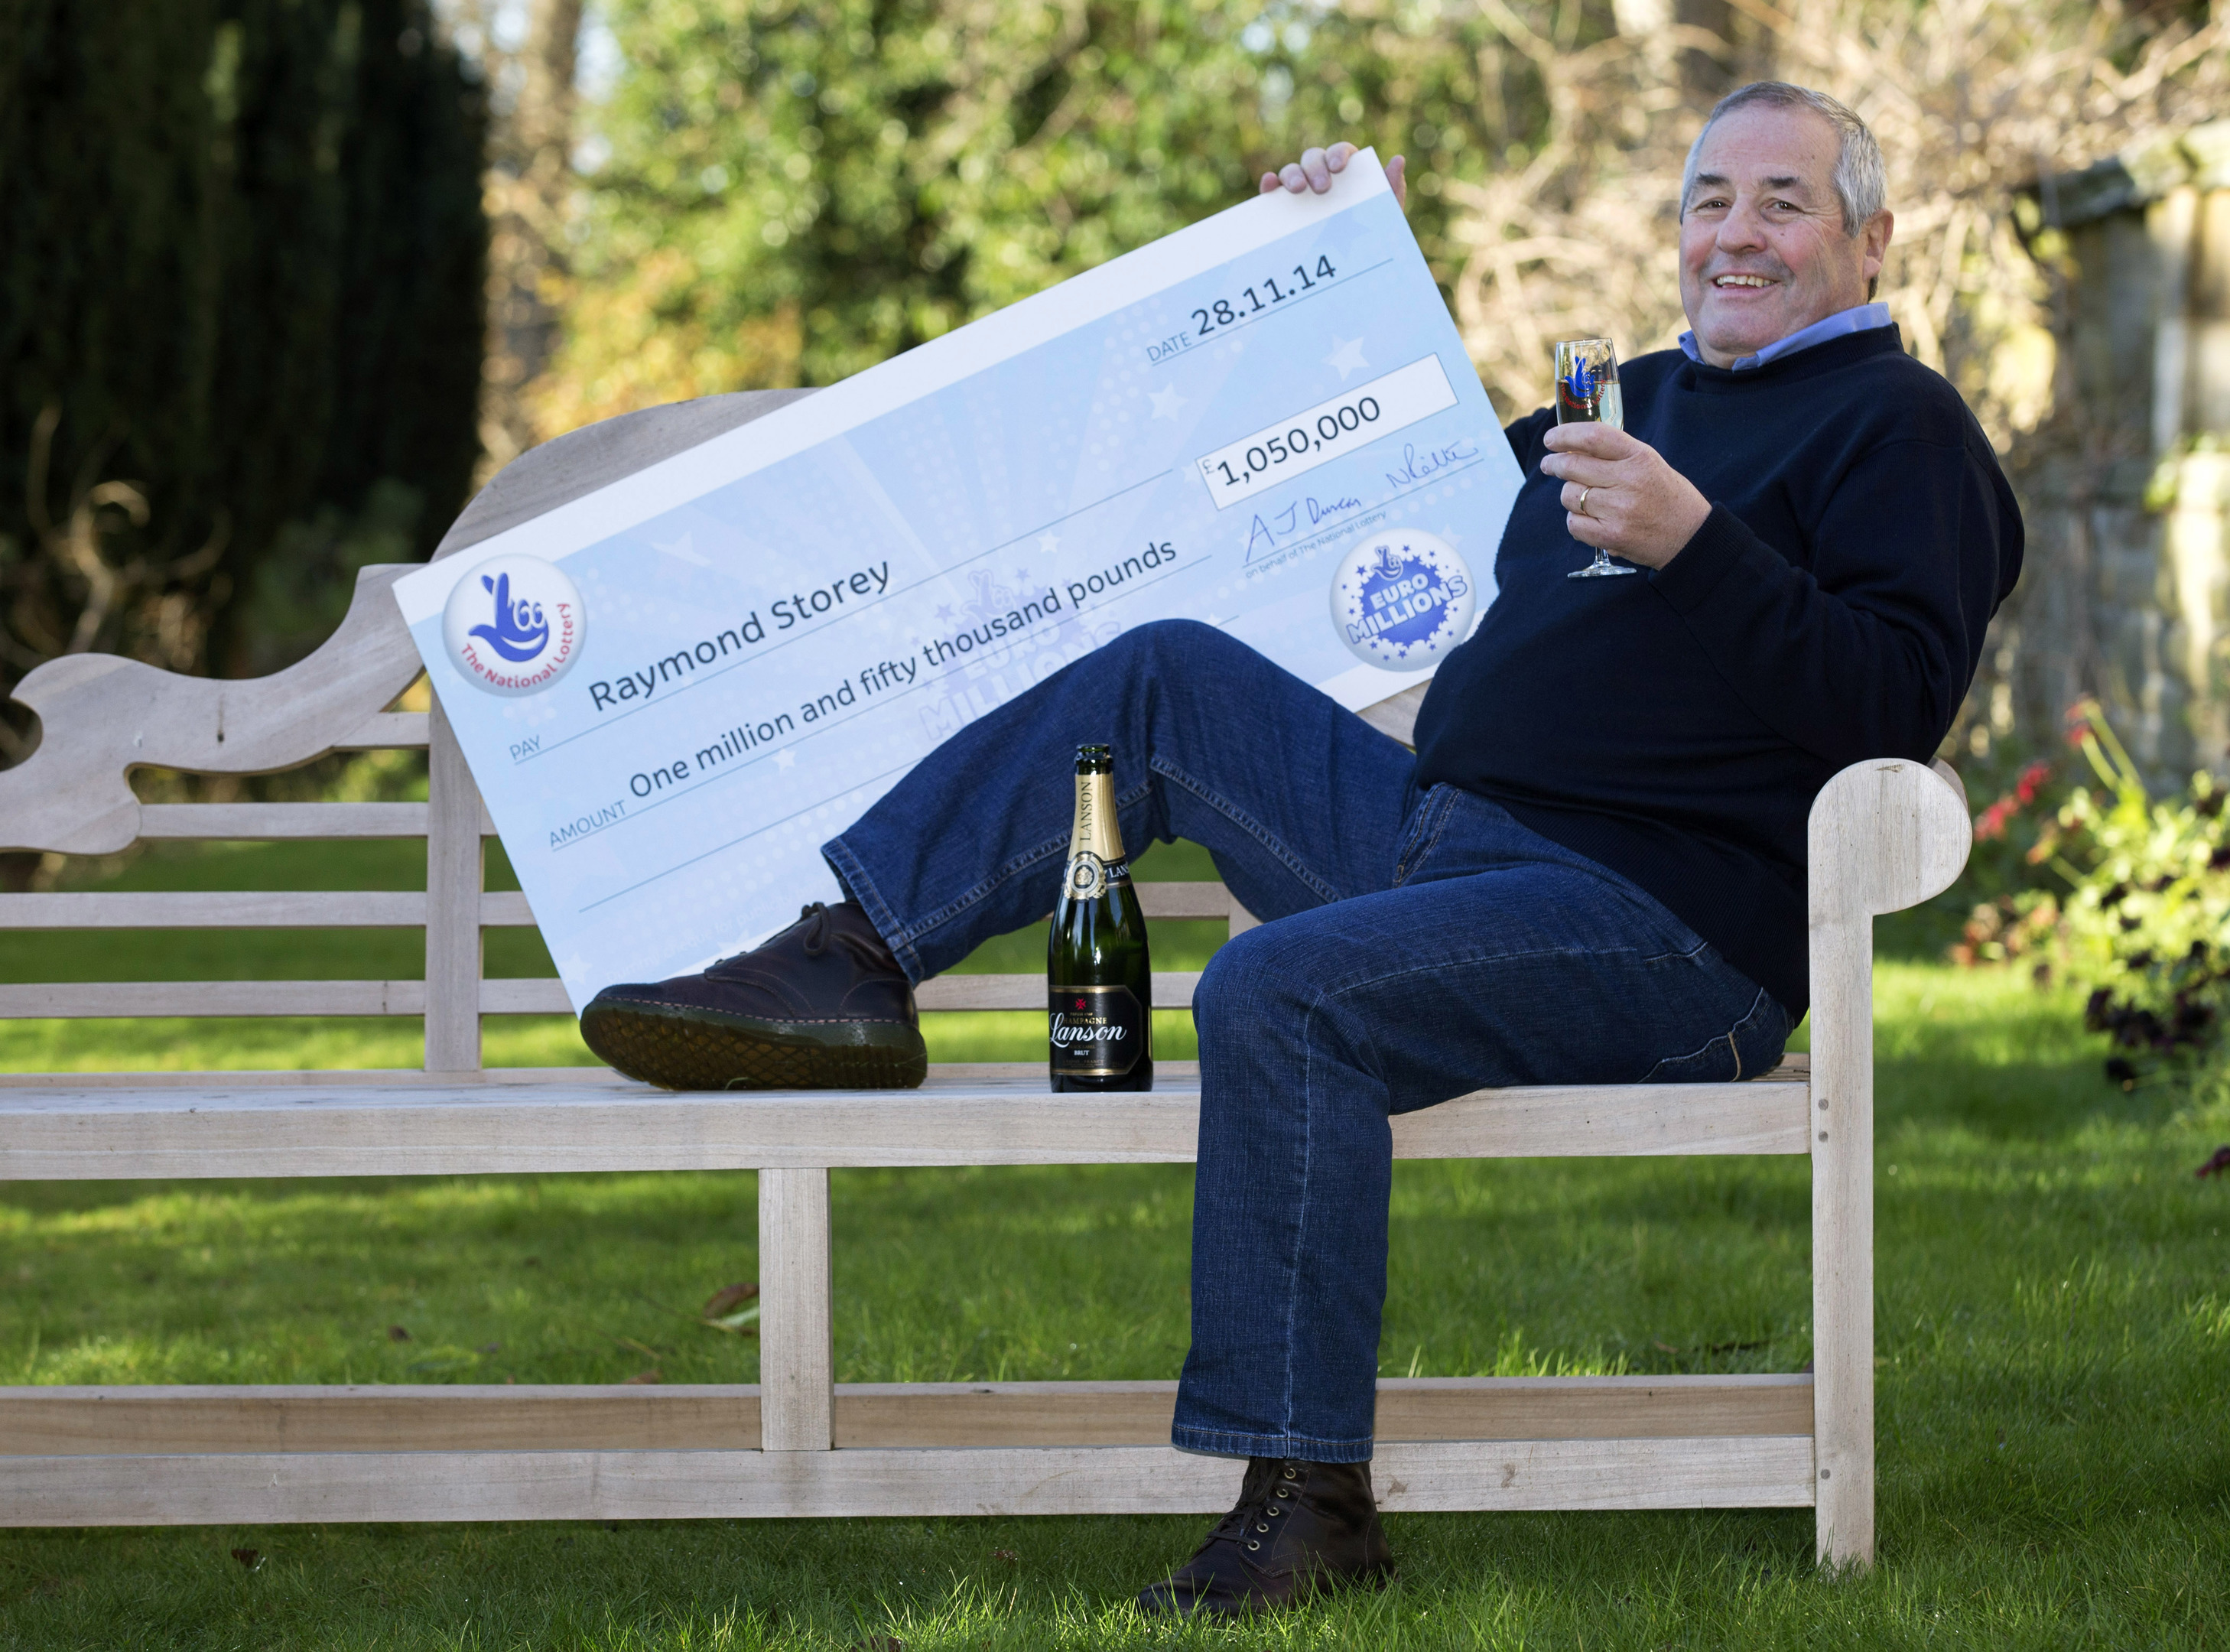 Raymond Storey retired after winning £1 million. Image: Graeme Hart